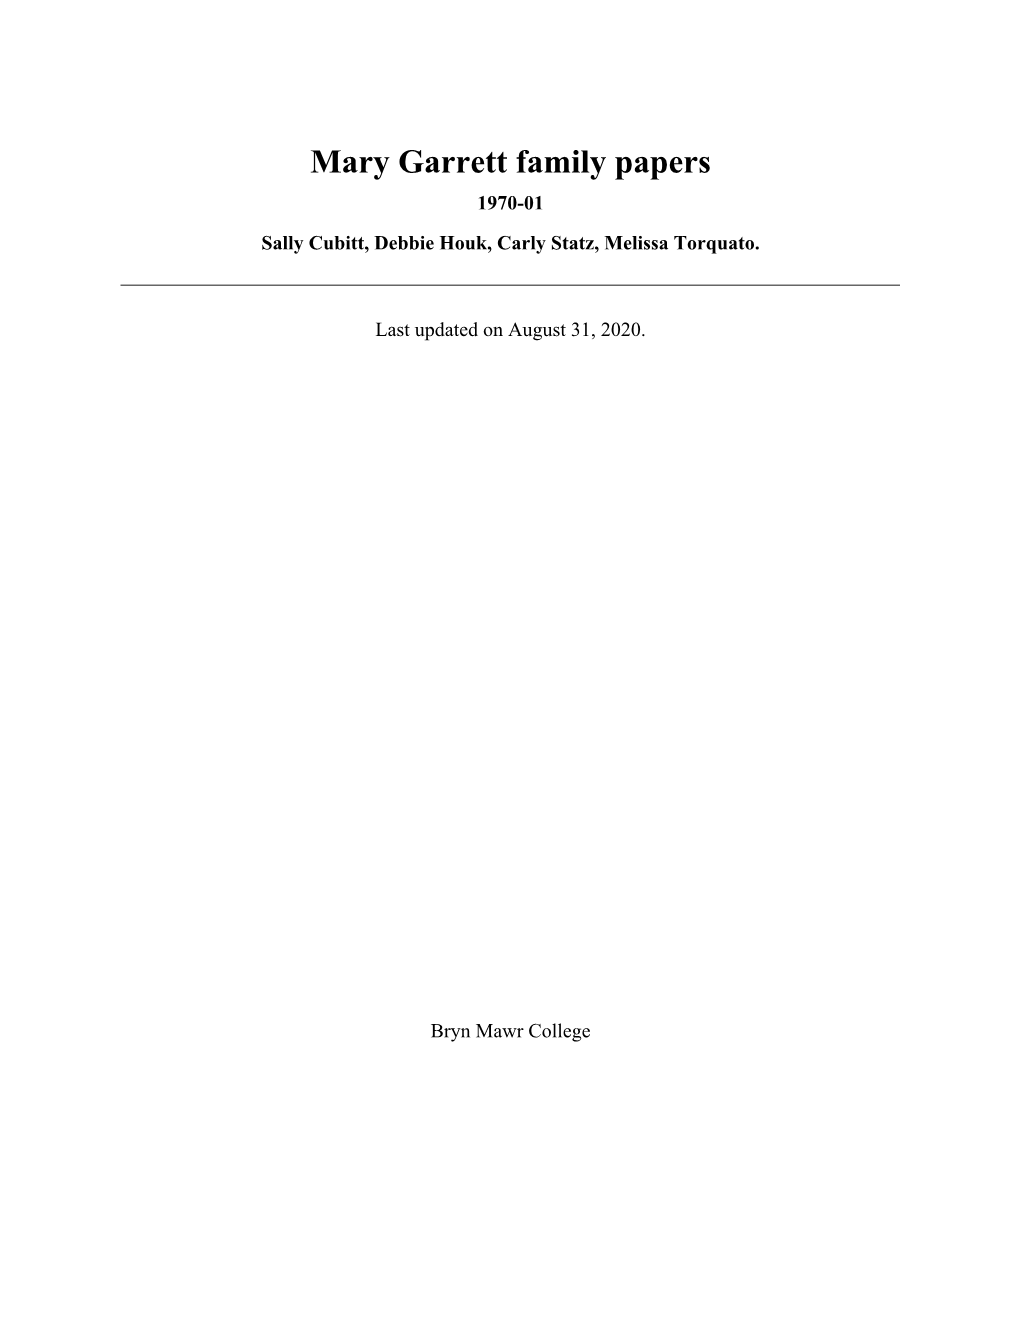 Mary Garrett Family Papers 1970-01 Sally Cubitt, Debbie Houk, Carly Statz, Melissa Torquato